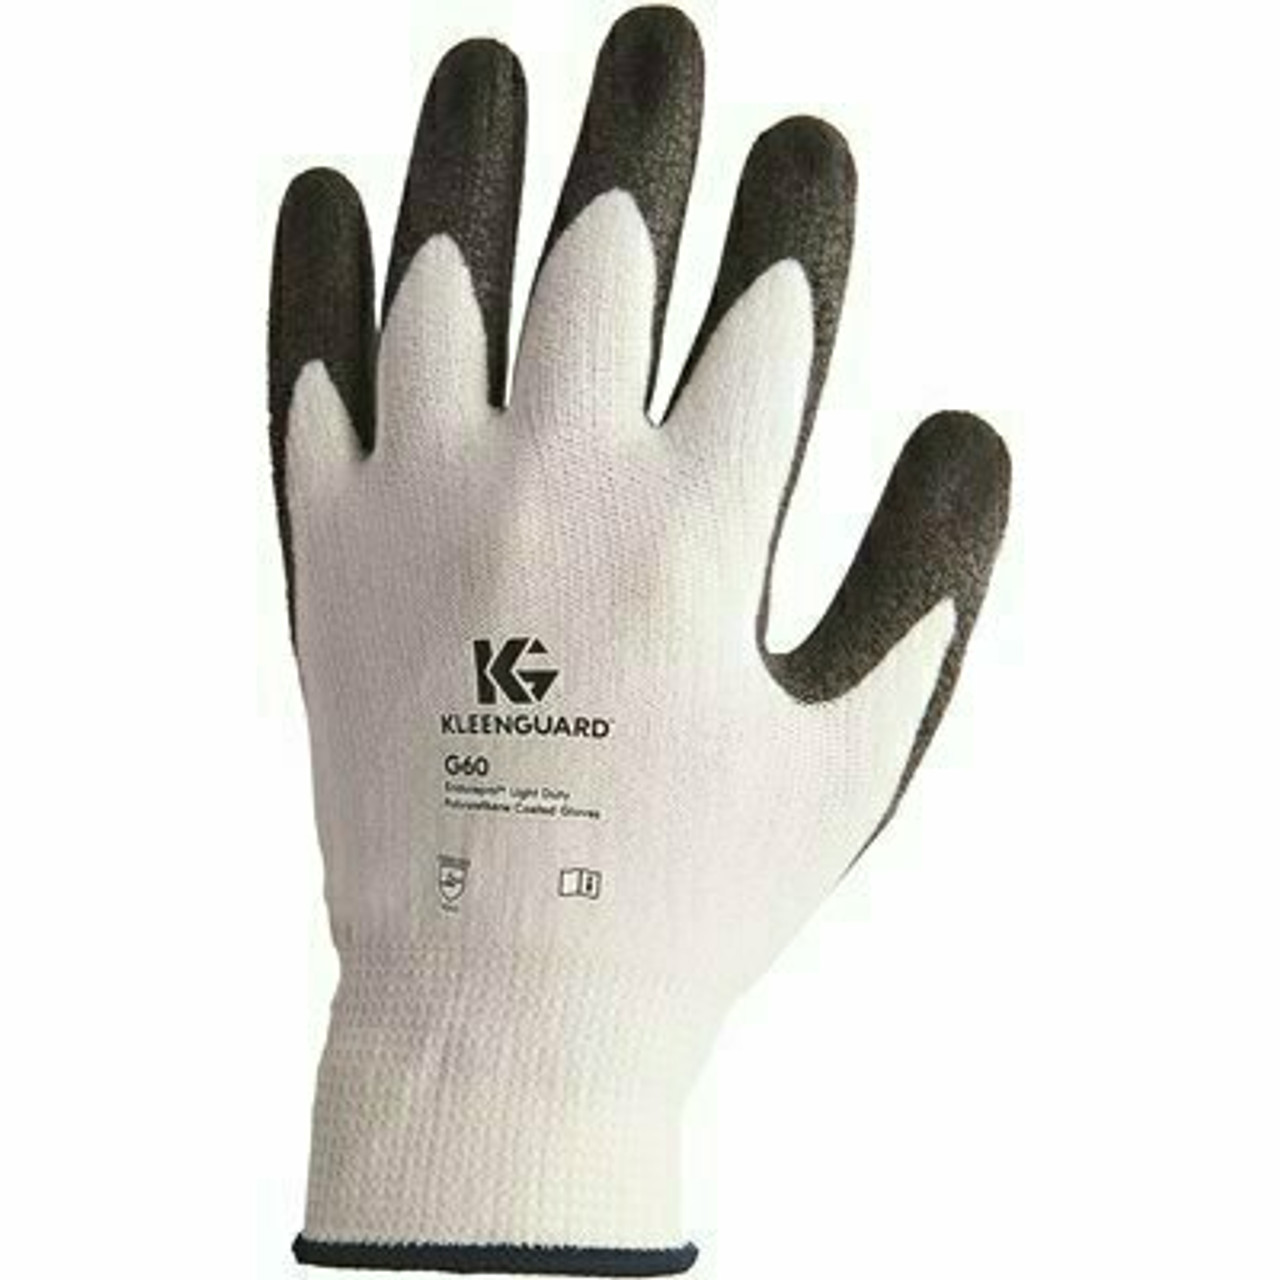 Kleenguard G60 Large Black And White Level 3 Economy Cut Resistant Gloves (12-Pairs/Bag, 1-Bag)